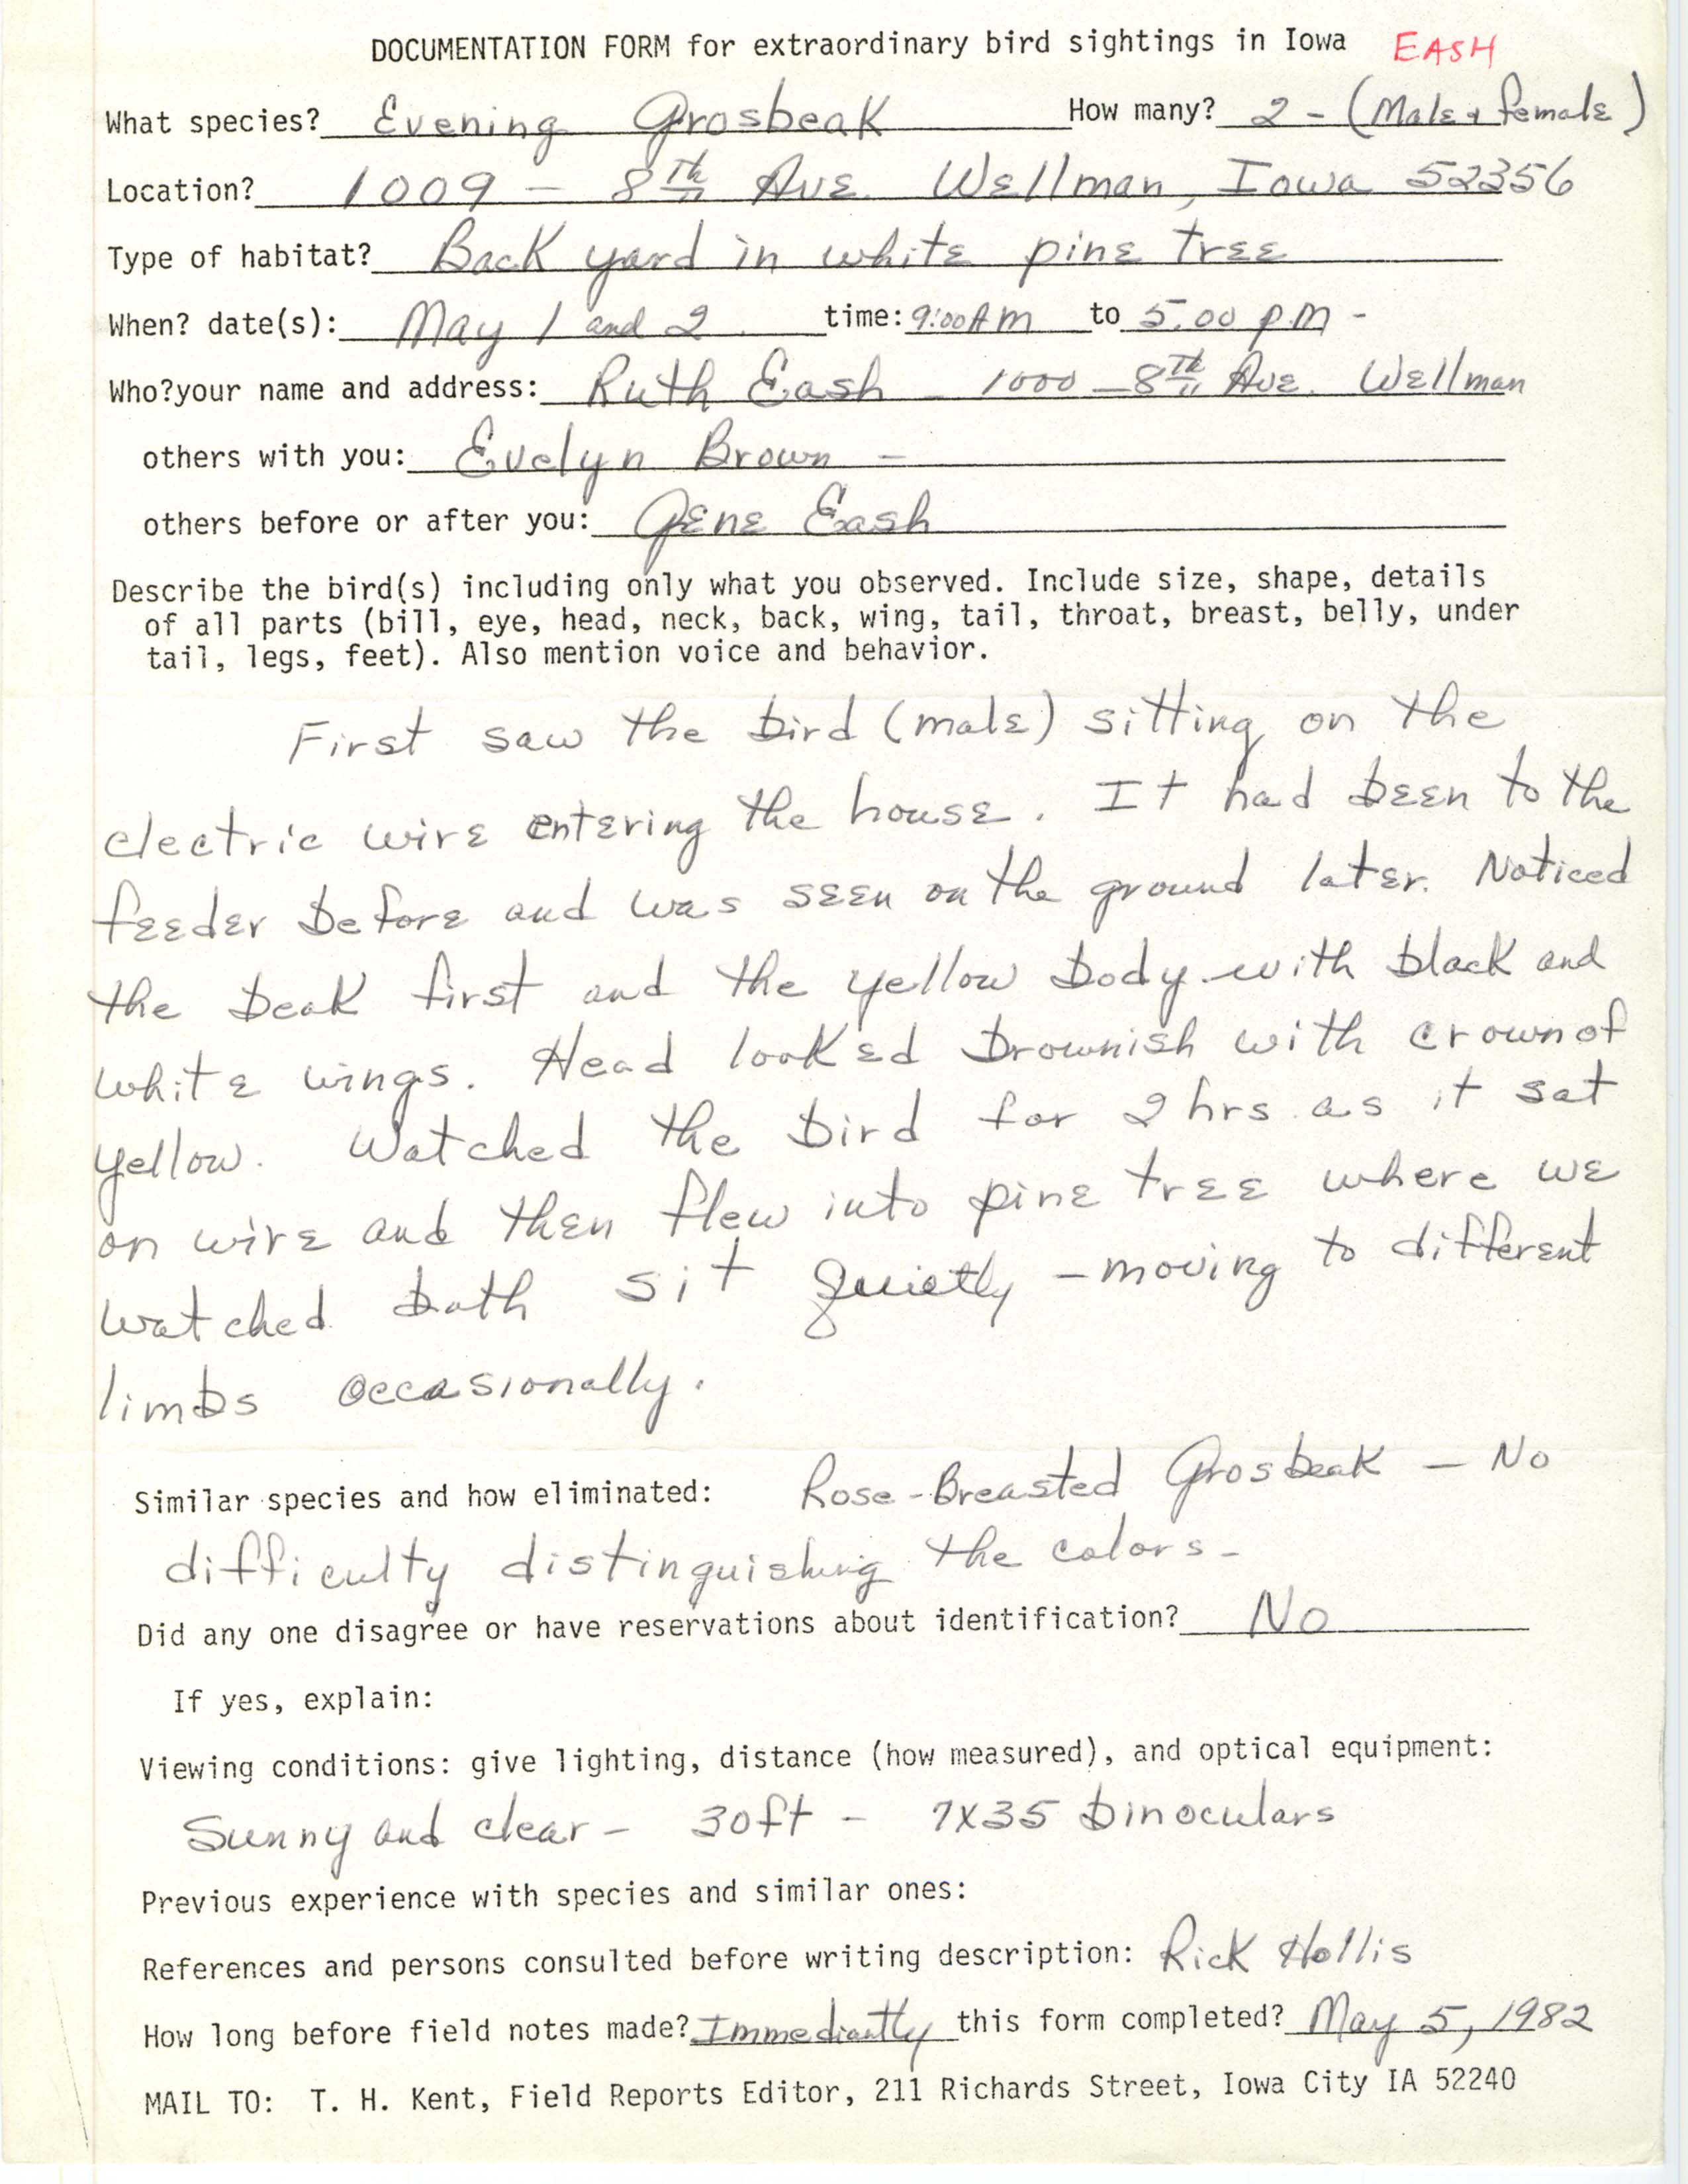 Rare bird documentation form for Evening Grosbeak at Wellman in 1982